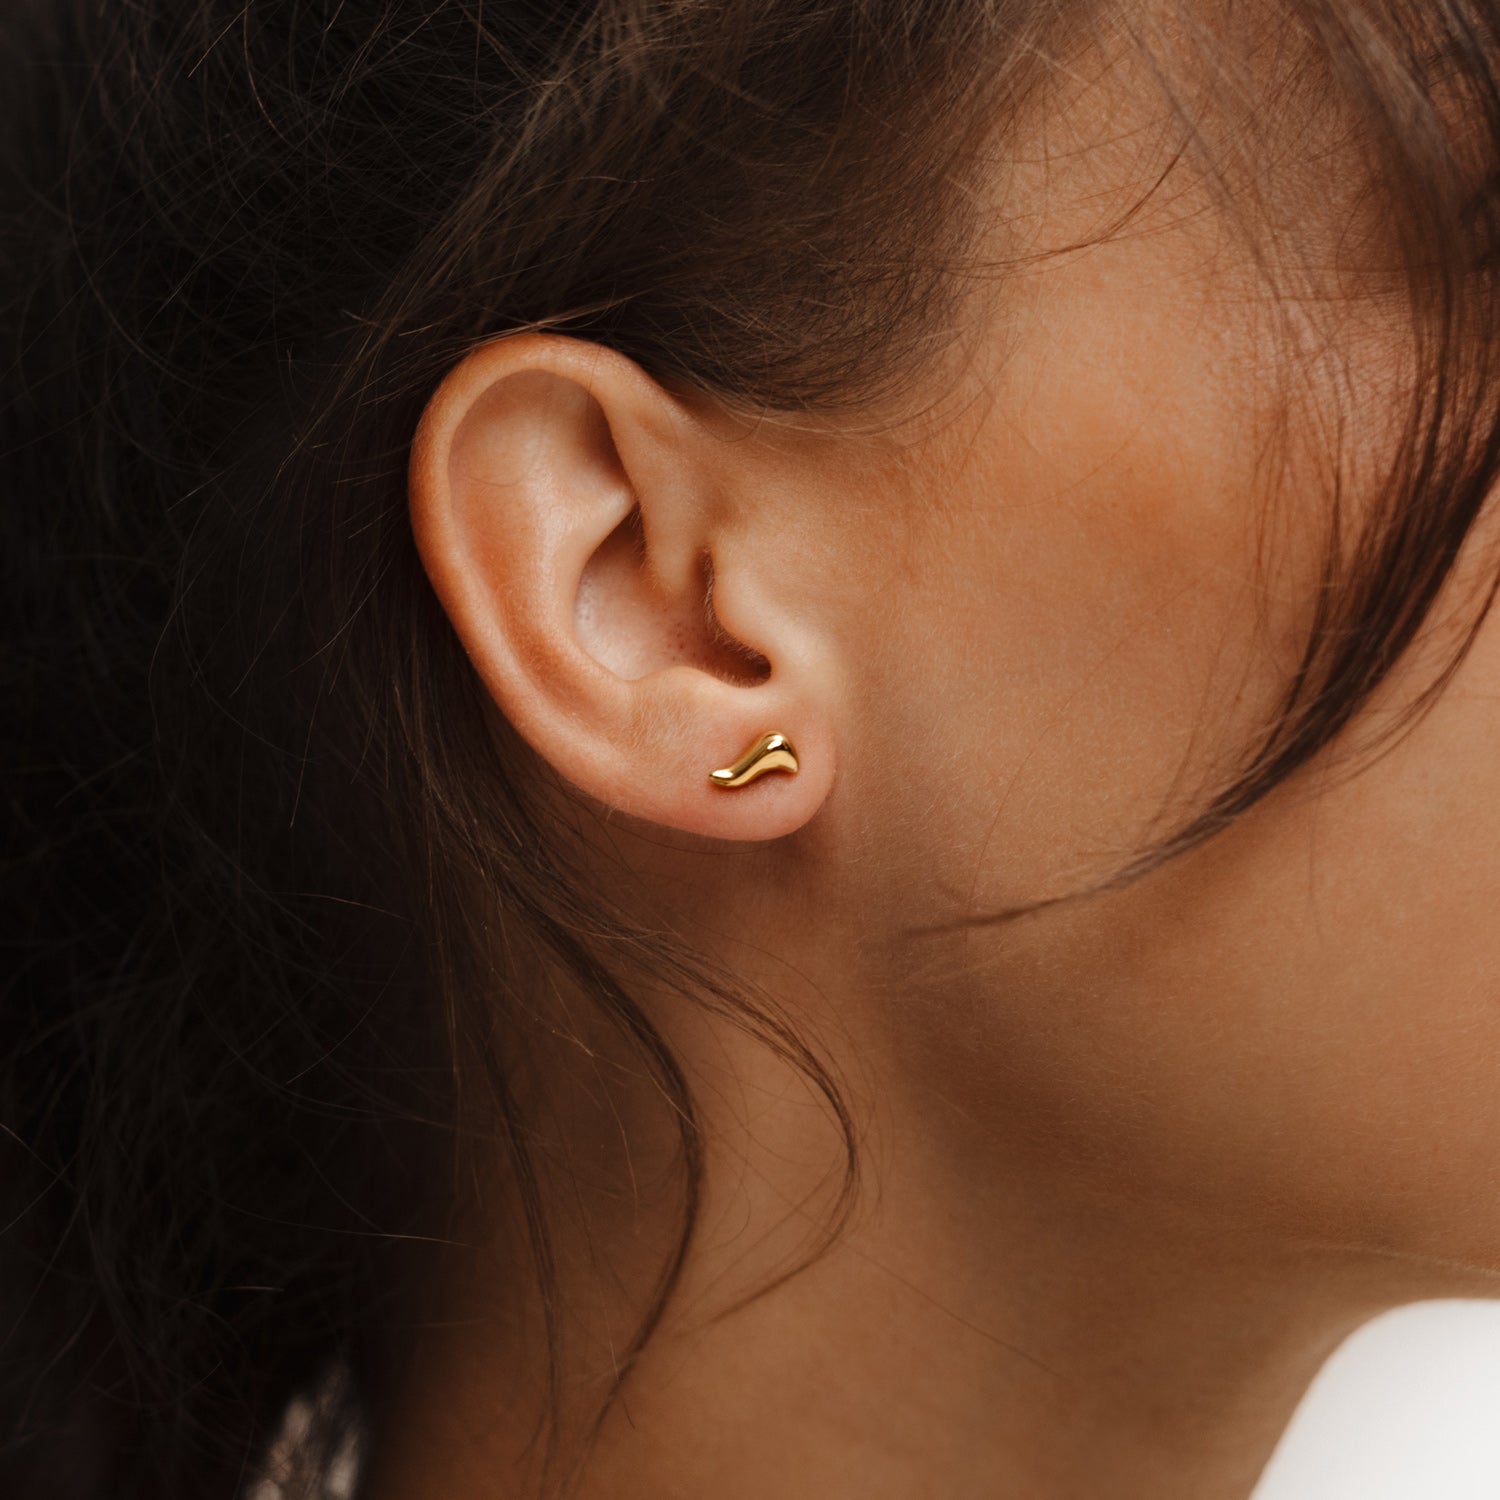 Poise Flow Stud Earrings, recycled 18k Gold Vermeil, shown on ear - VEYIA Berlin